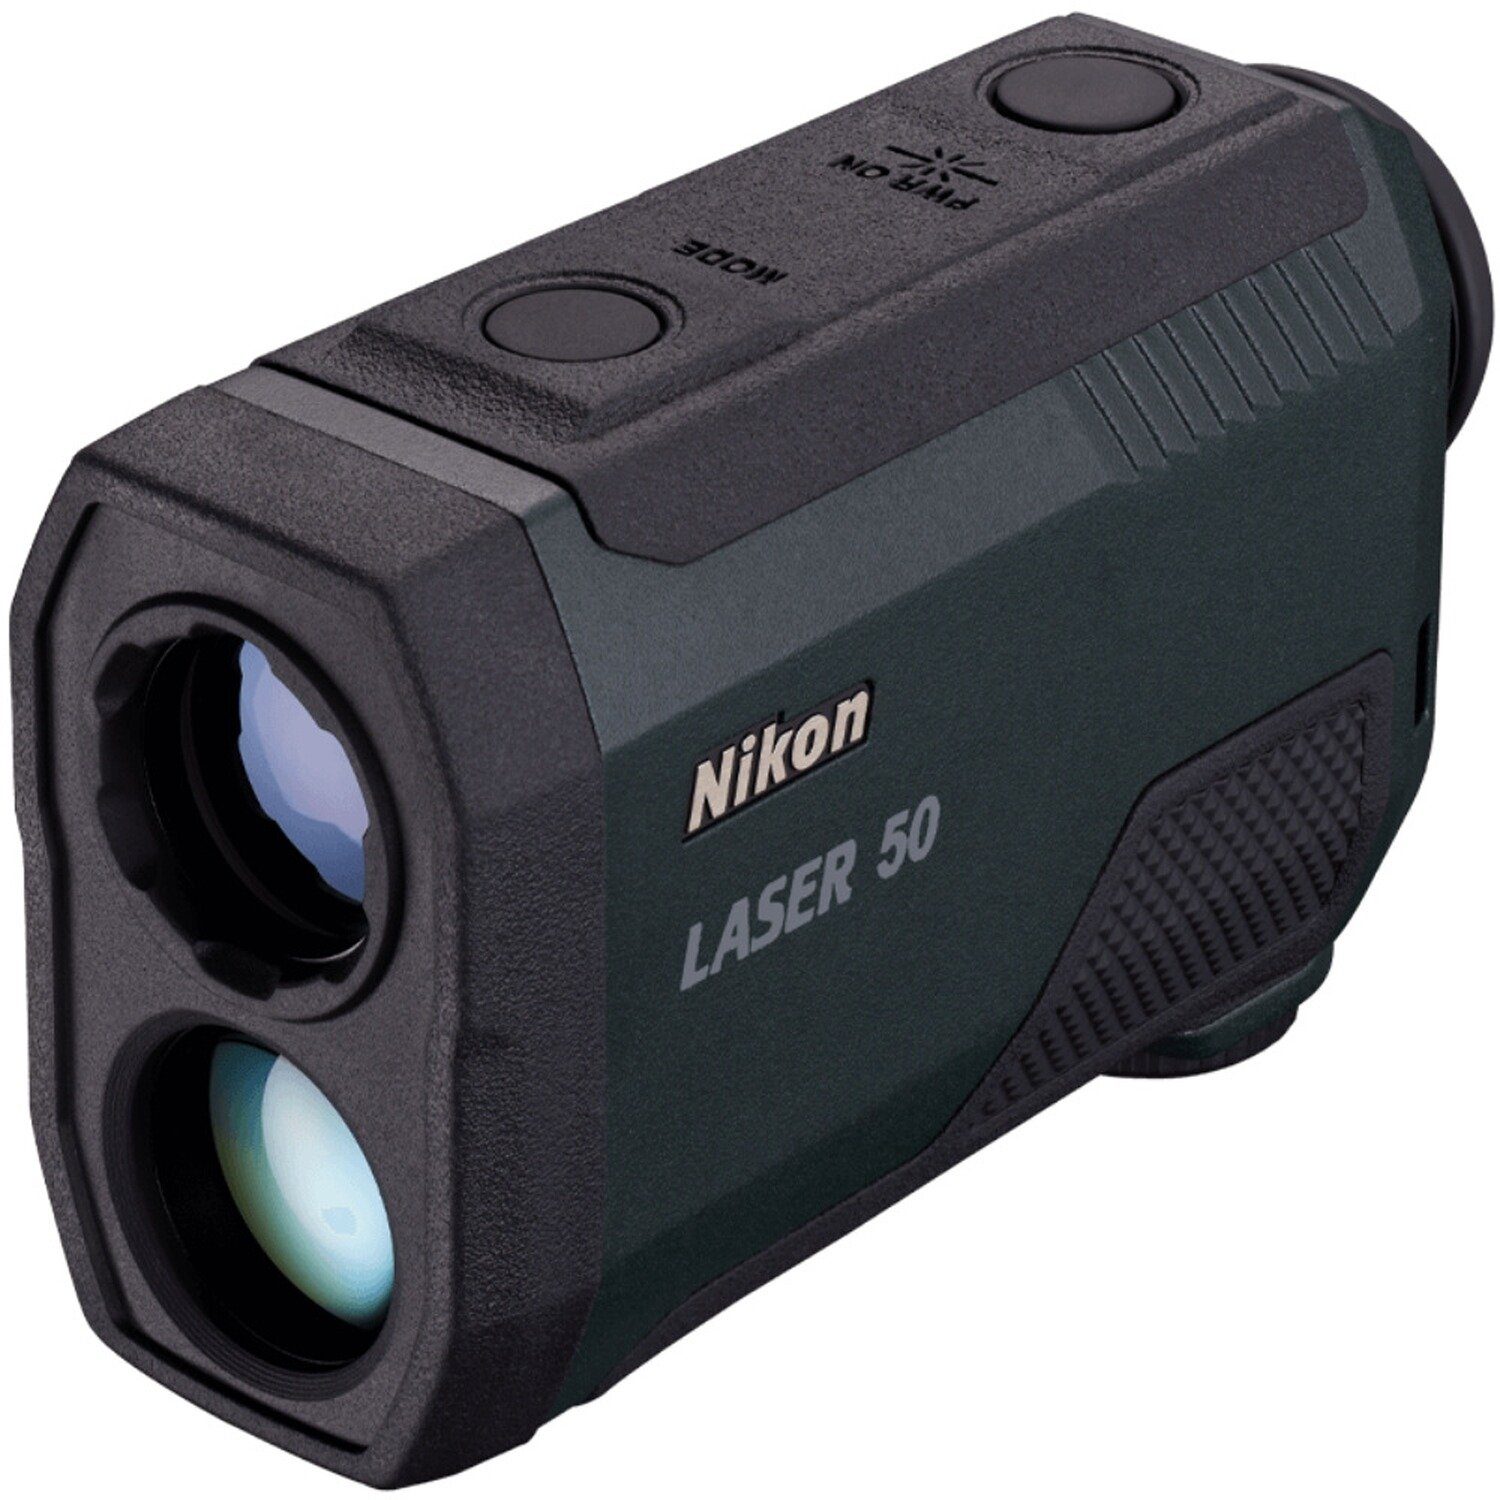 Nikon Entfernungsmesser Laser 50 Fernglas